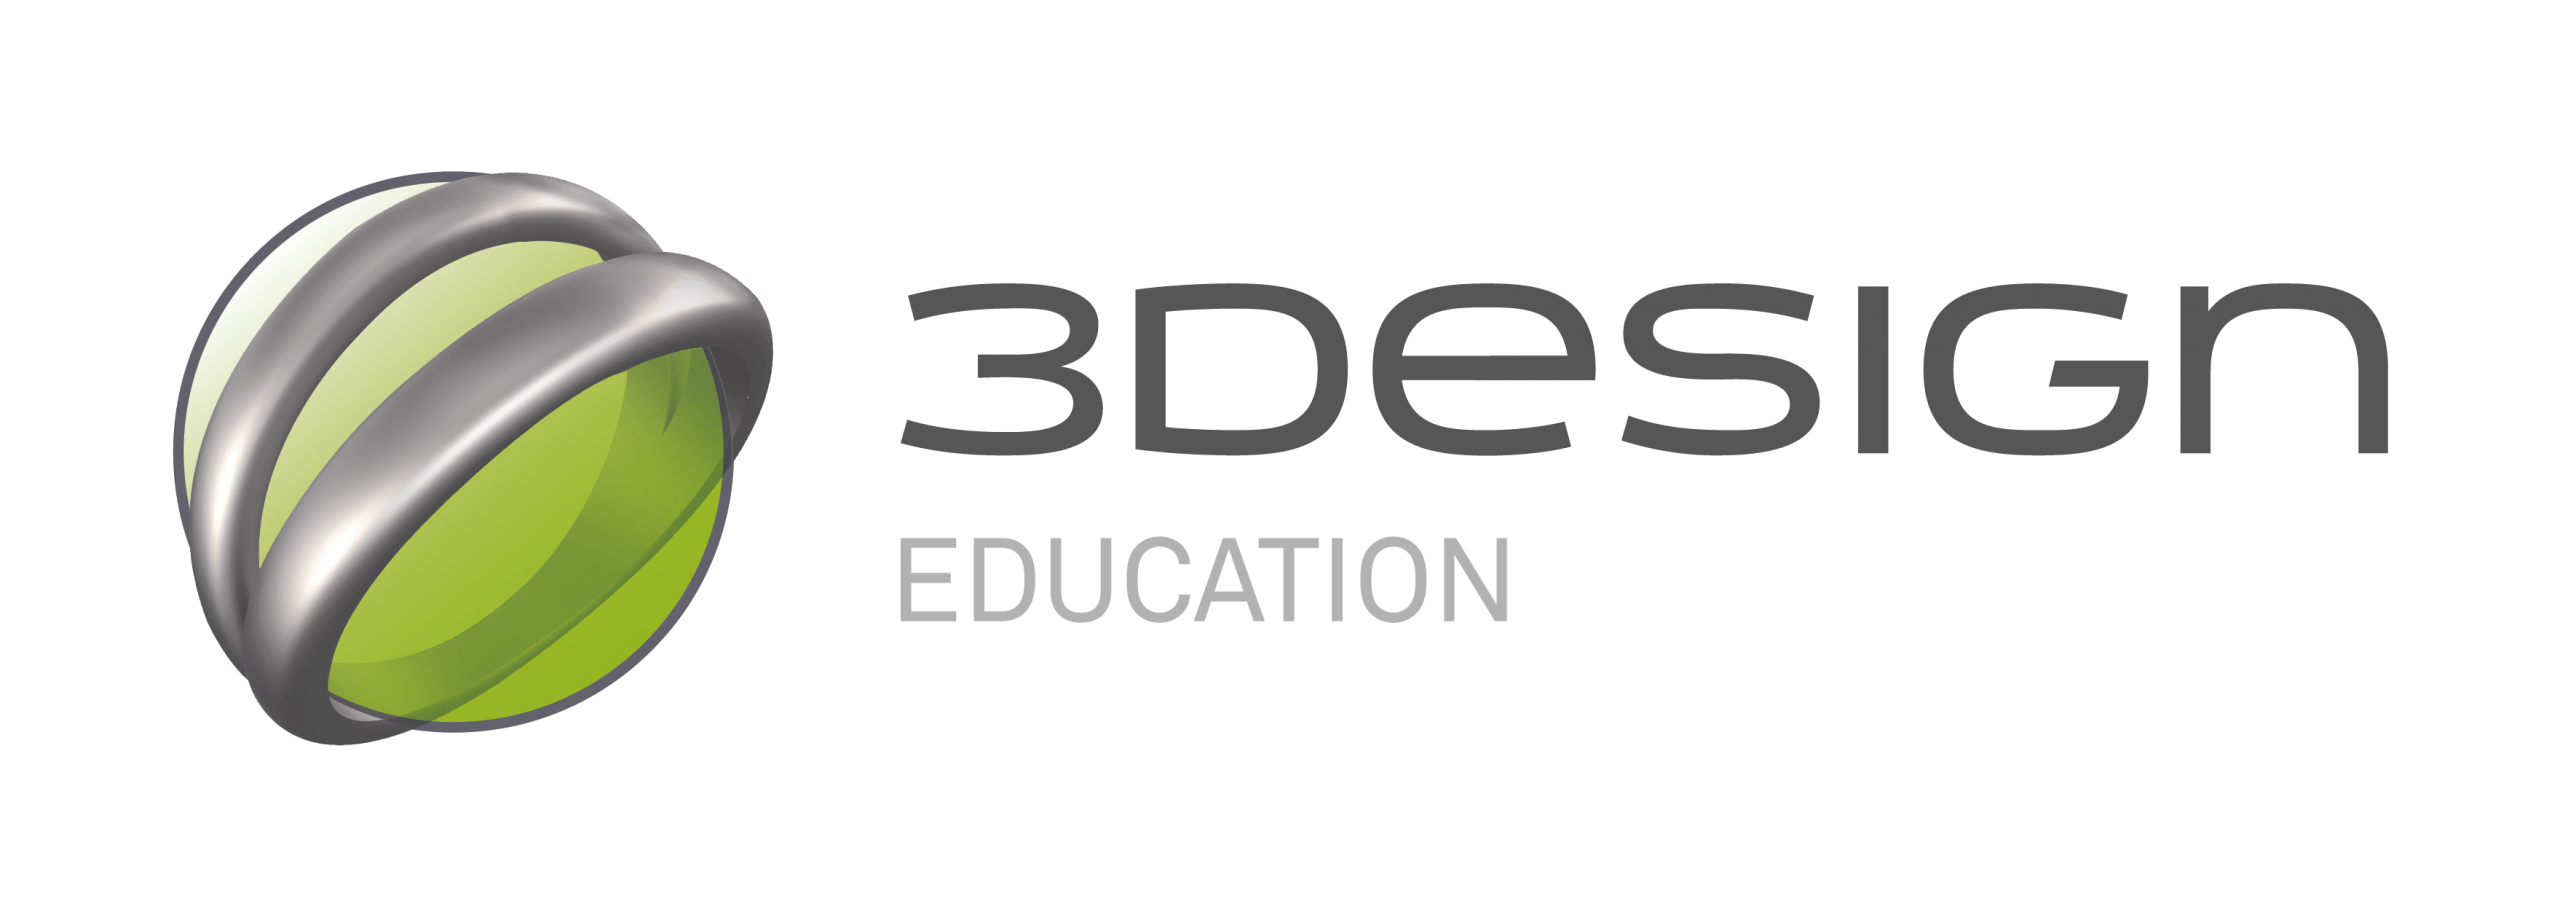 3Design Logo Education